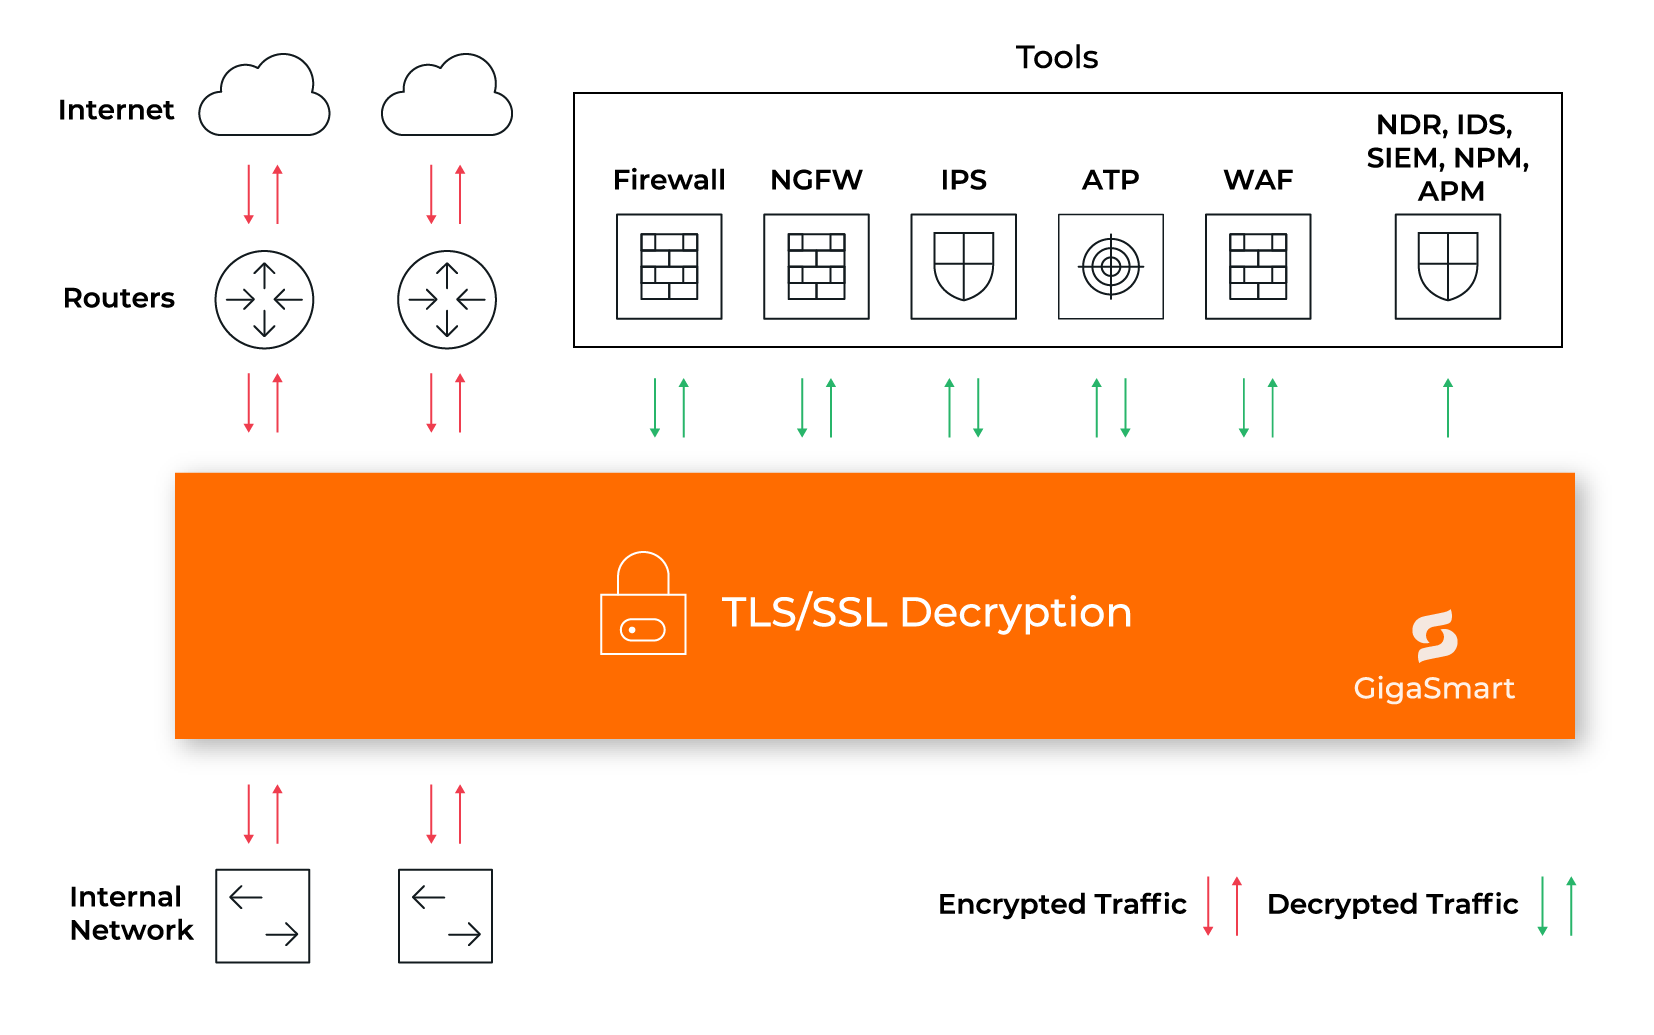 TLS/SSL decryption